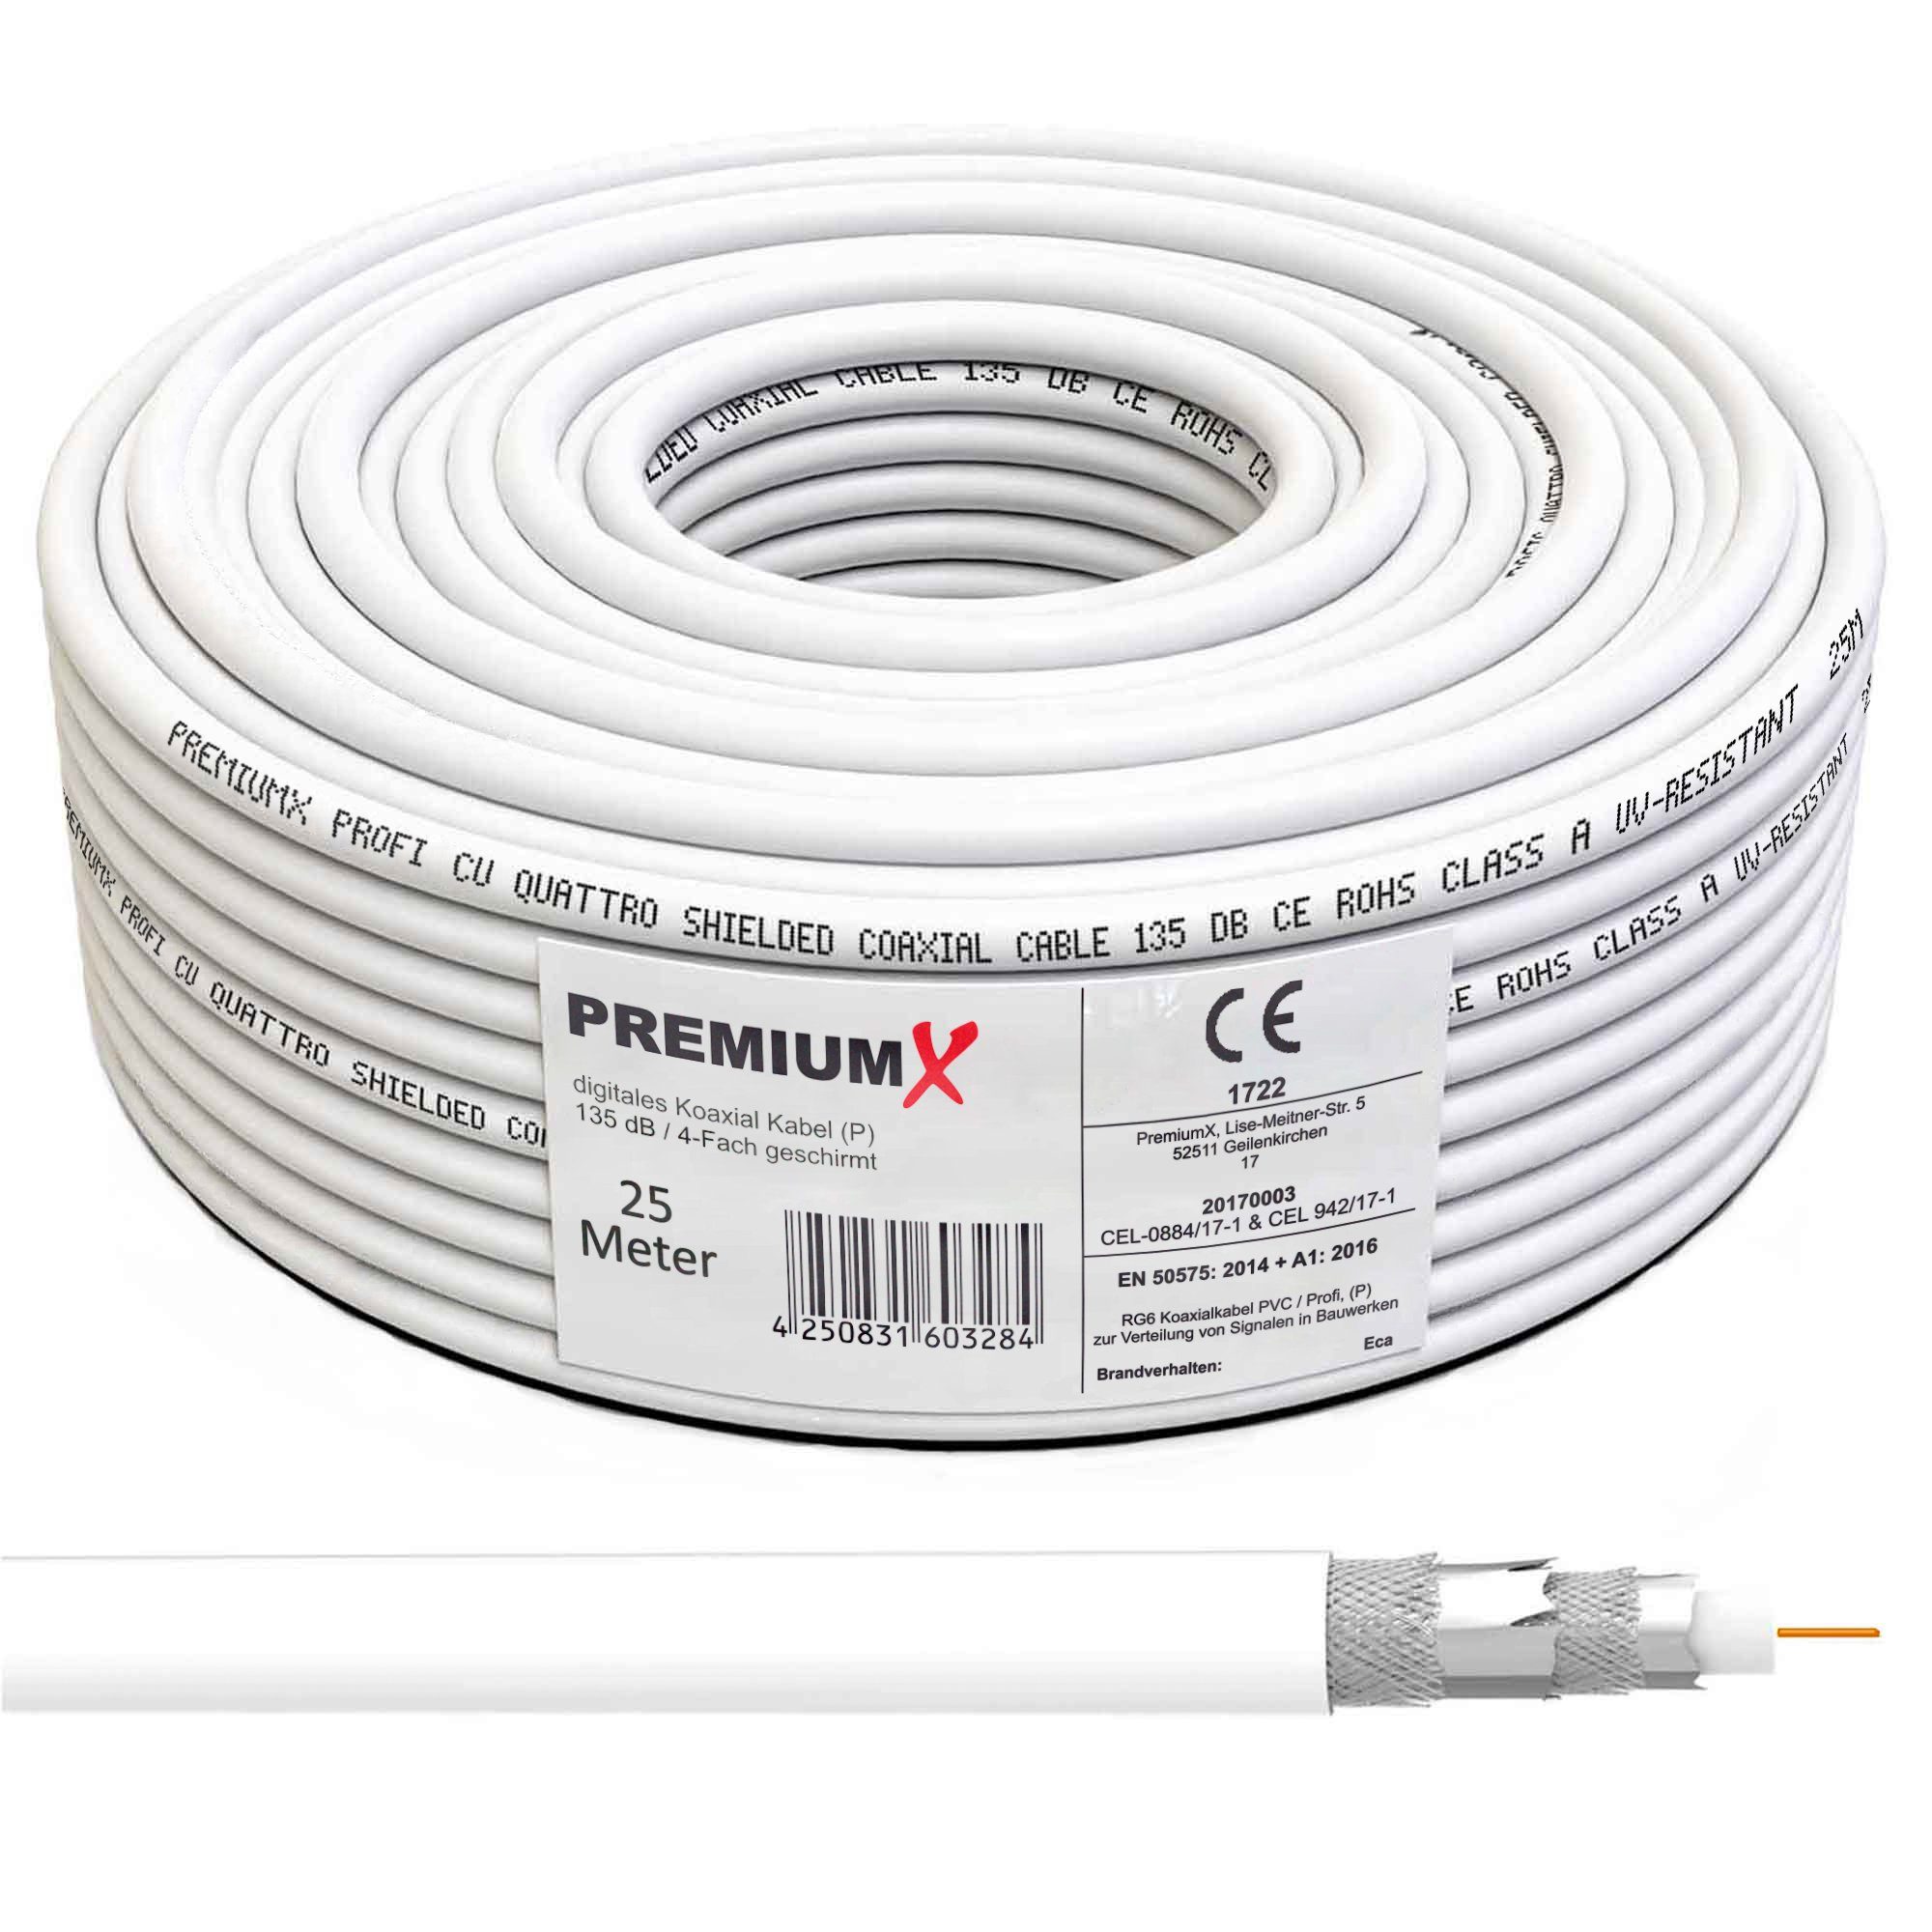 PremiumX 25m PROFI Koaxial Kabel 135 dB 4-Fach geschirmt REINES KUPFER TV-Kabel